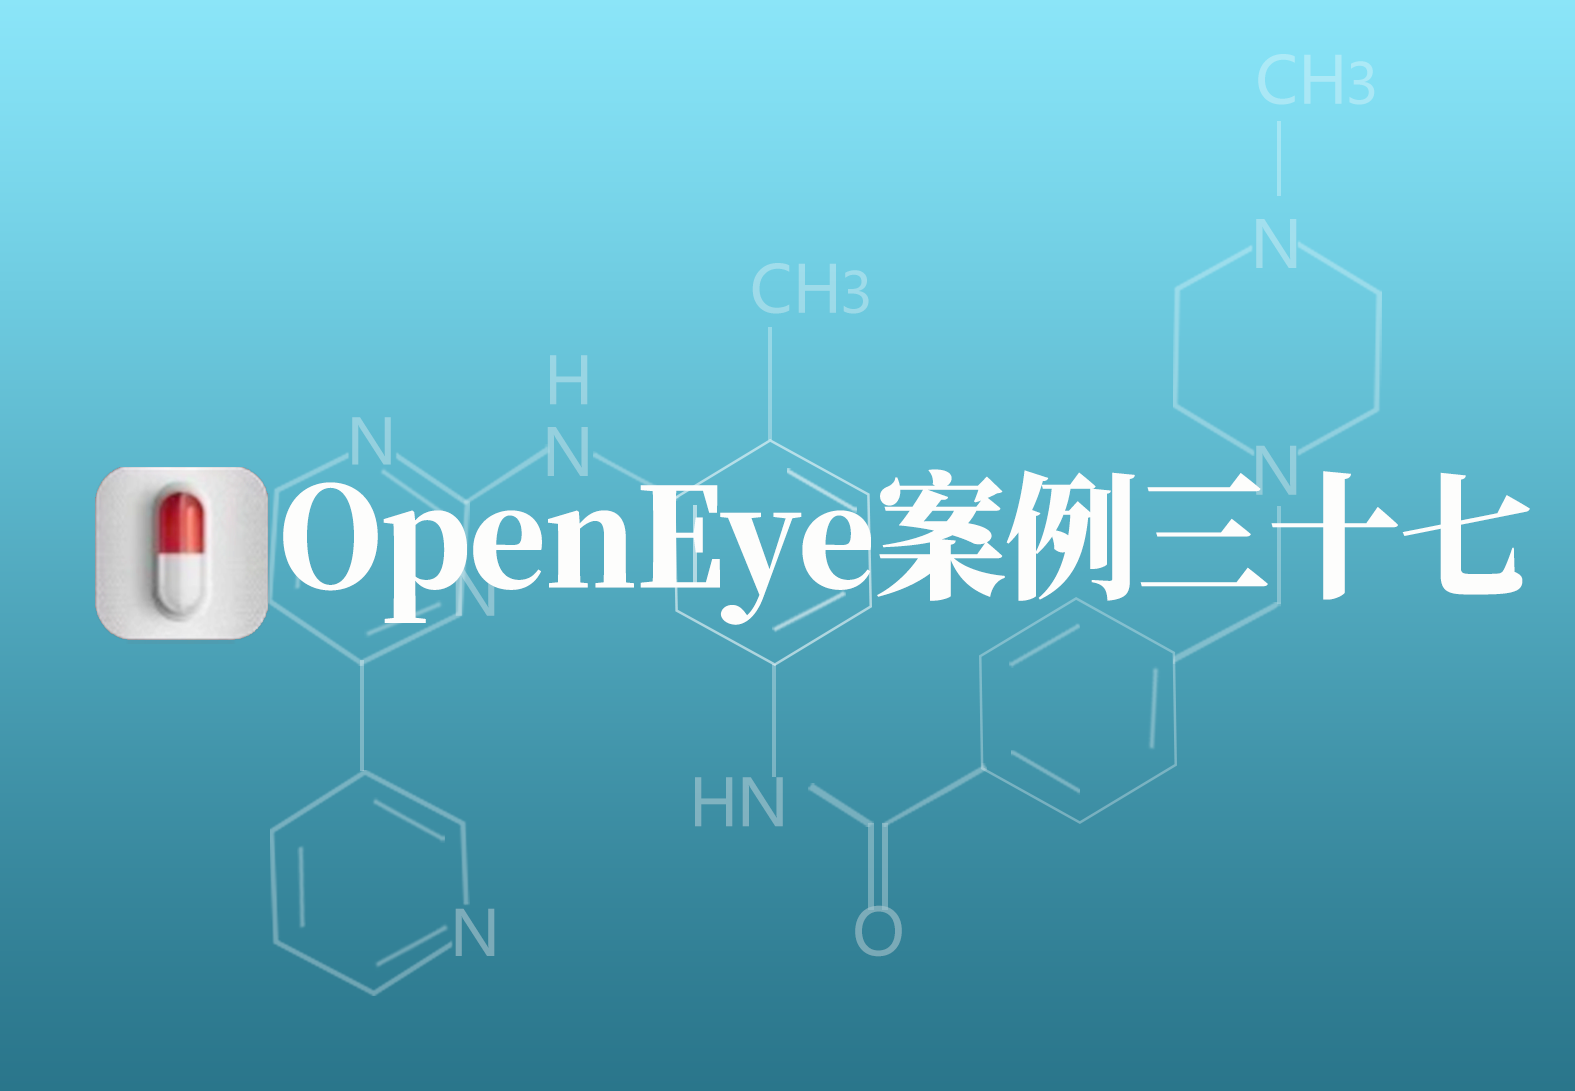 OpenEye应用案例三十七：虚拟筛选发现Wnt4蛋白抑制剂的研究